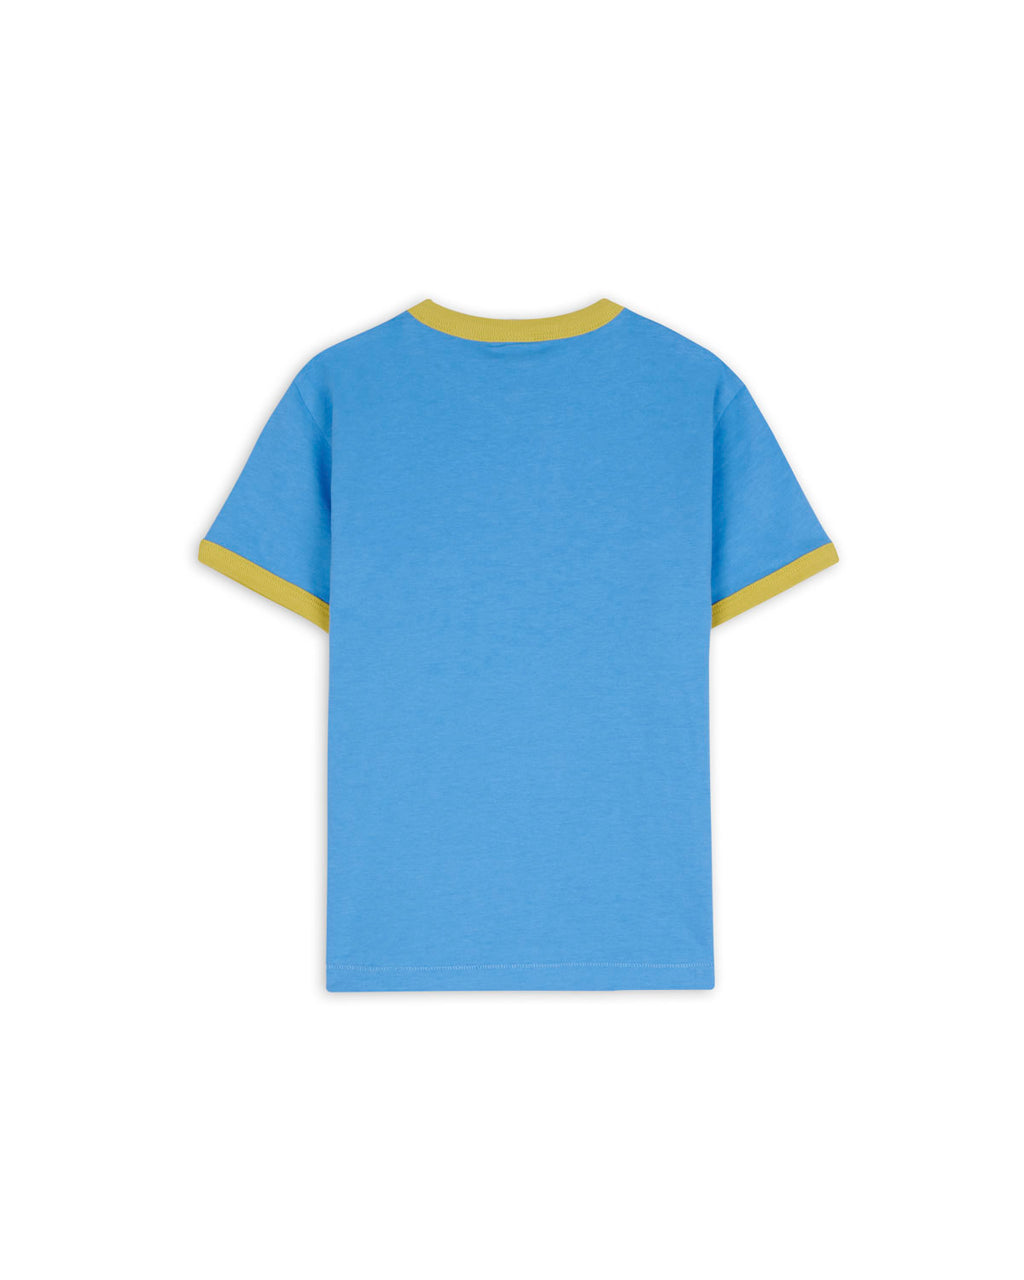 Brain Dead x Minions Kids Short Sleeve Ringer T-Shirt - Blue 2